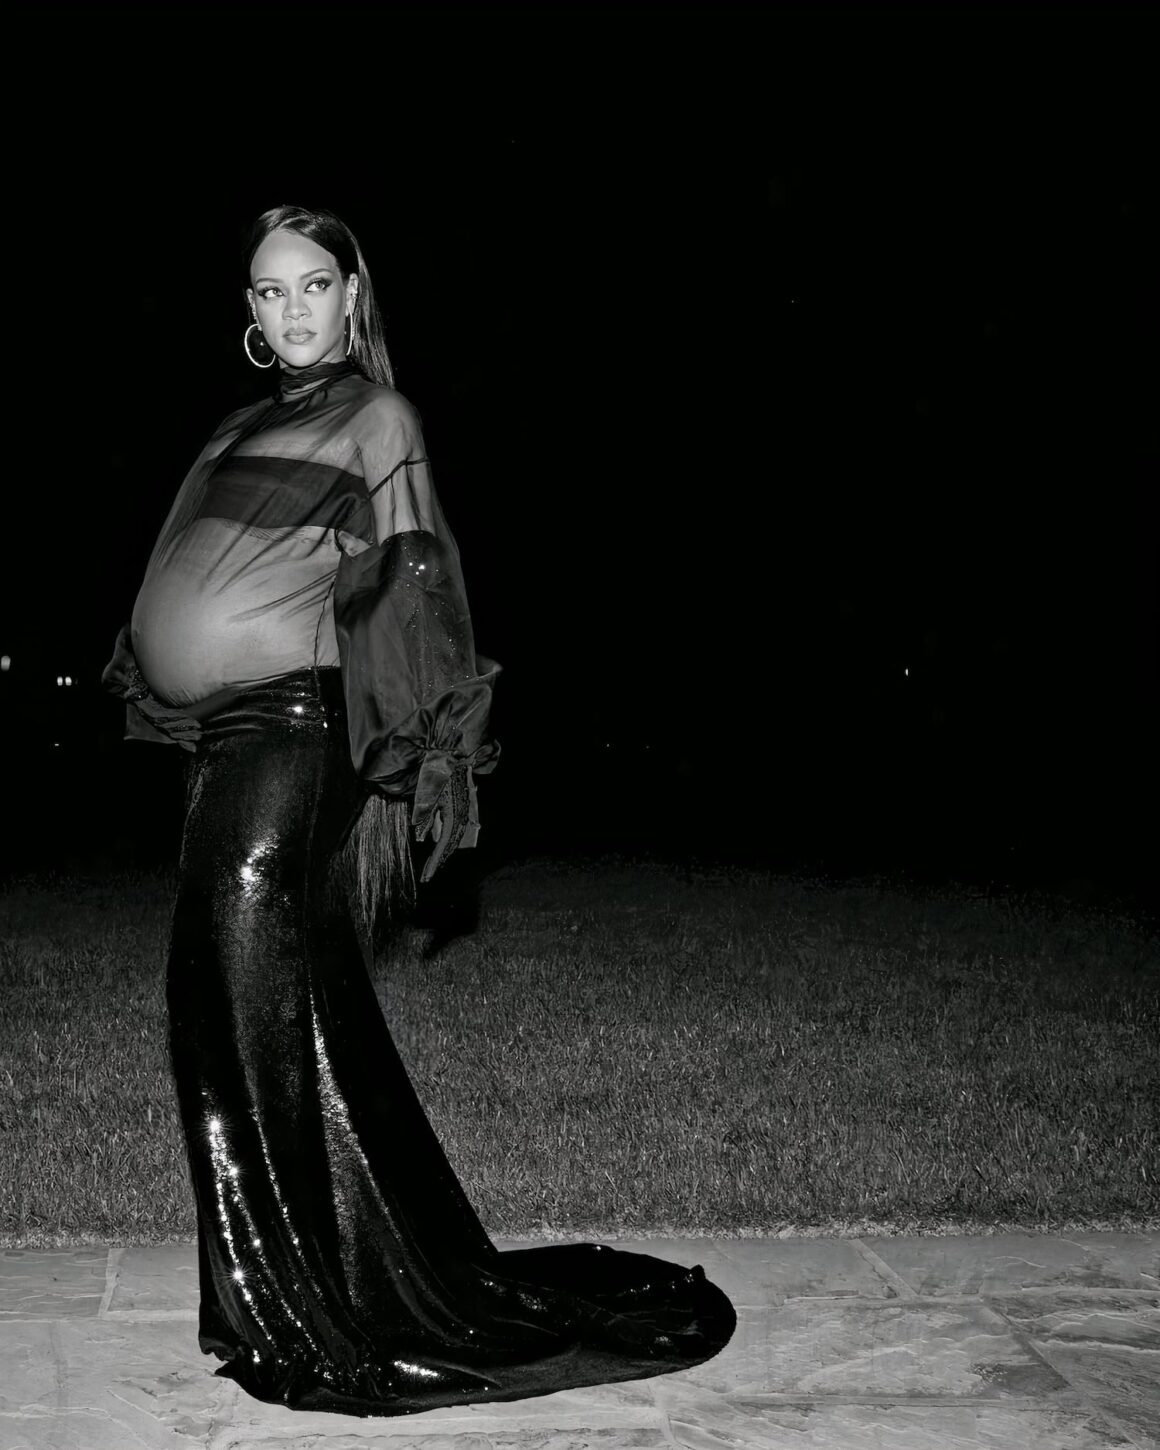 Pregnant Rihanna Stuns In Sheer Dress At Oscars 2022 Afterparty